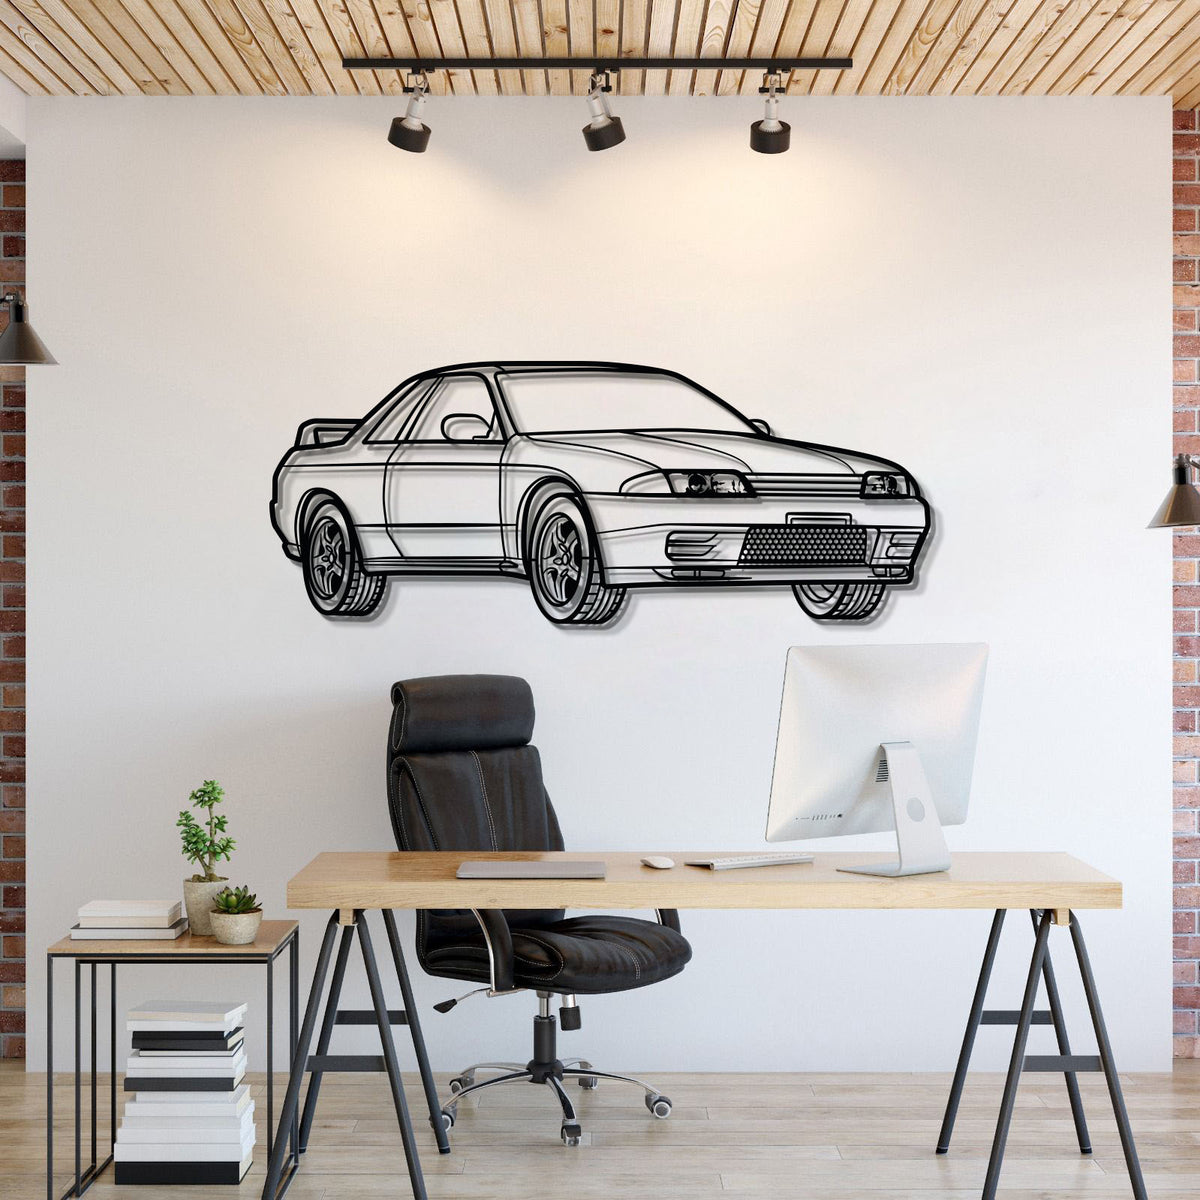 GTR R32 Perspective Metal Car Wall Art - MT0456